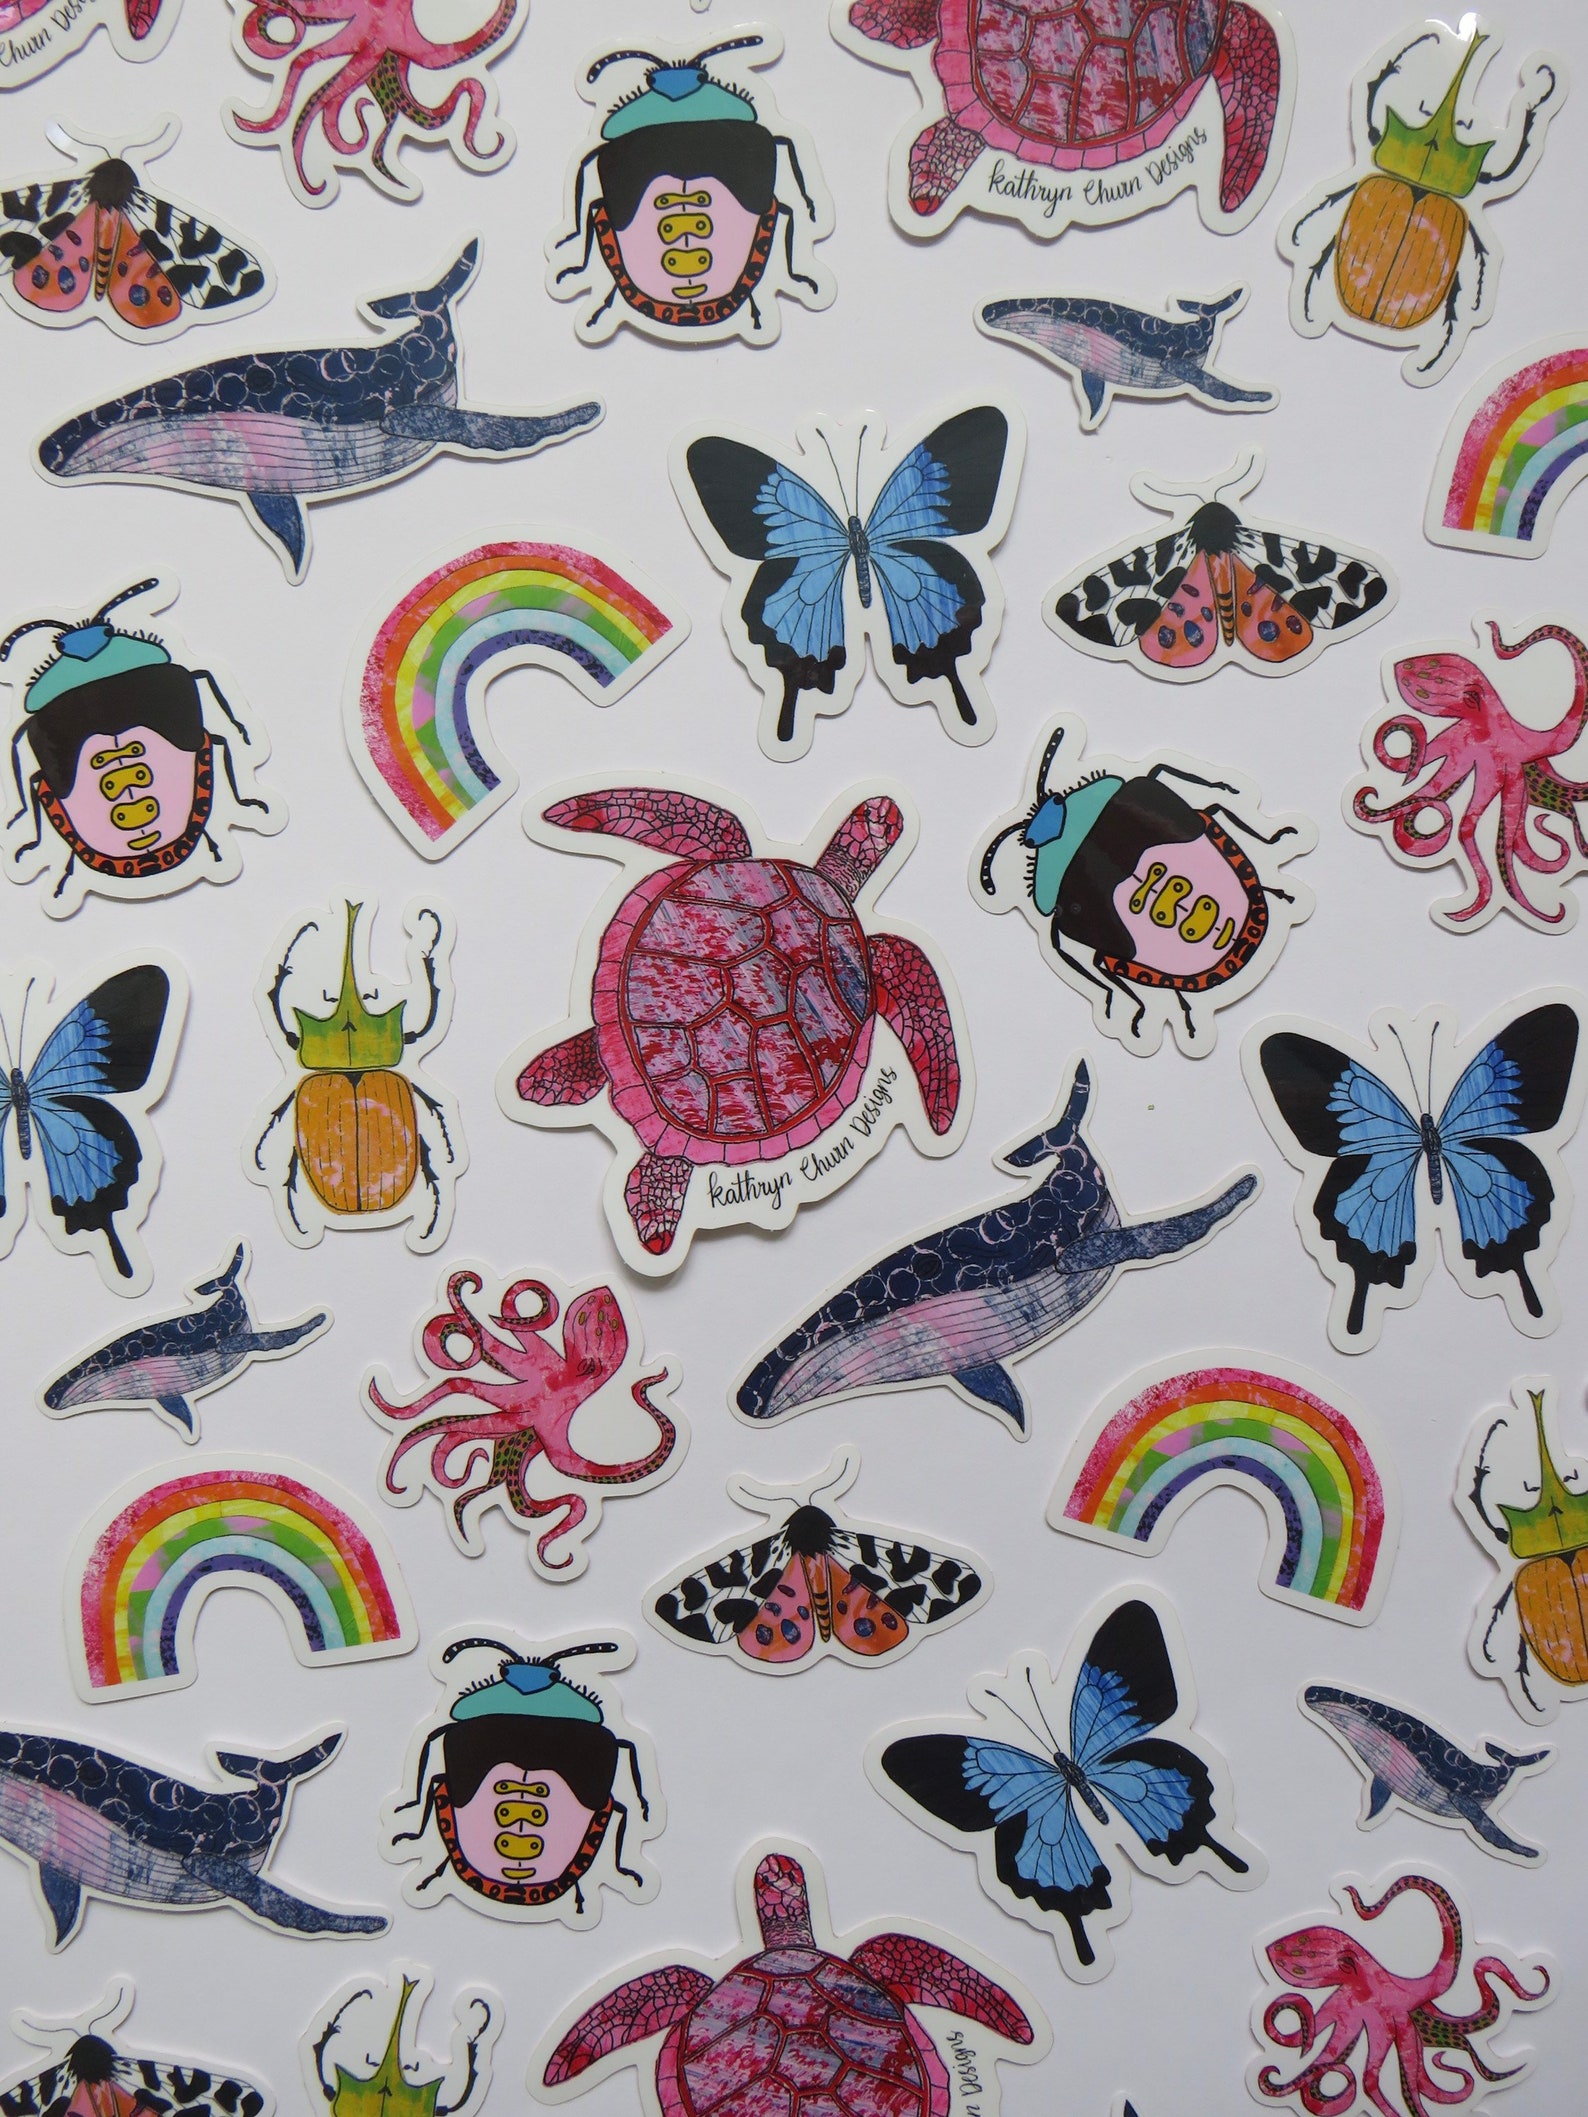 Bug sticker / insect sticker / animal sticker / vinyl sticker | Etsy